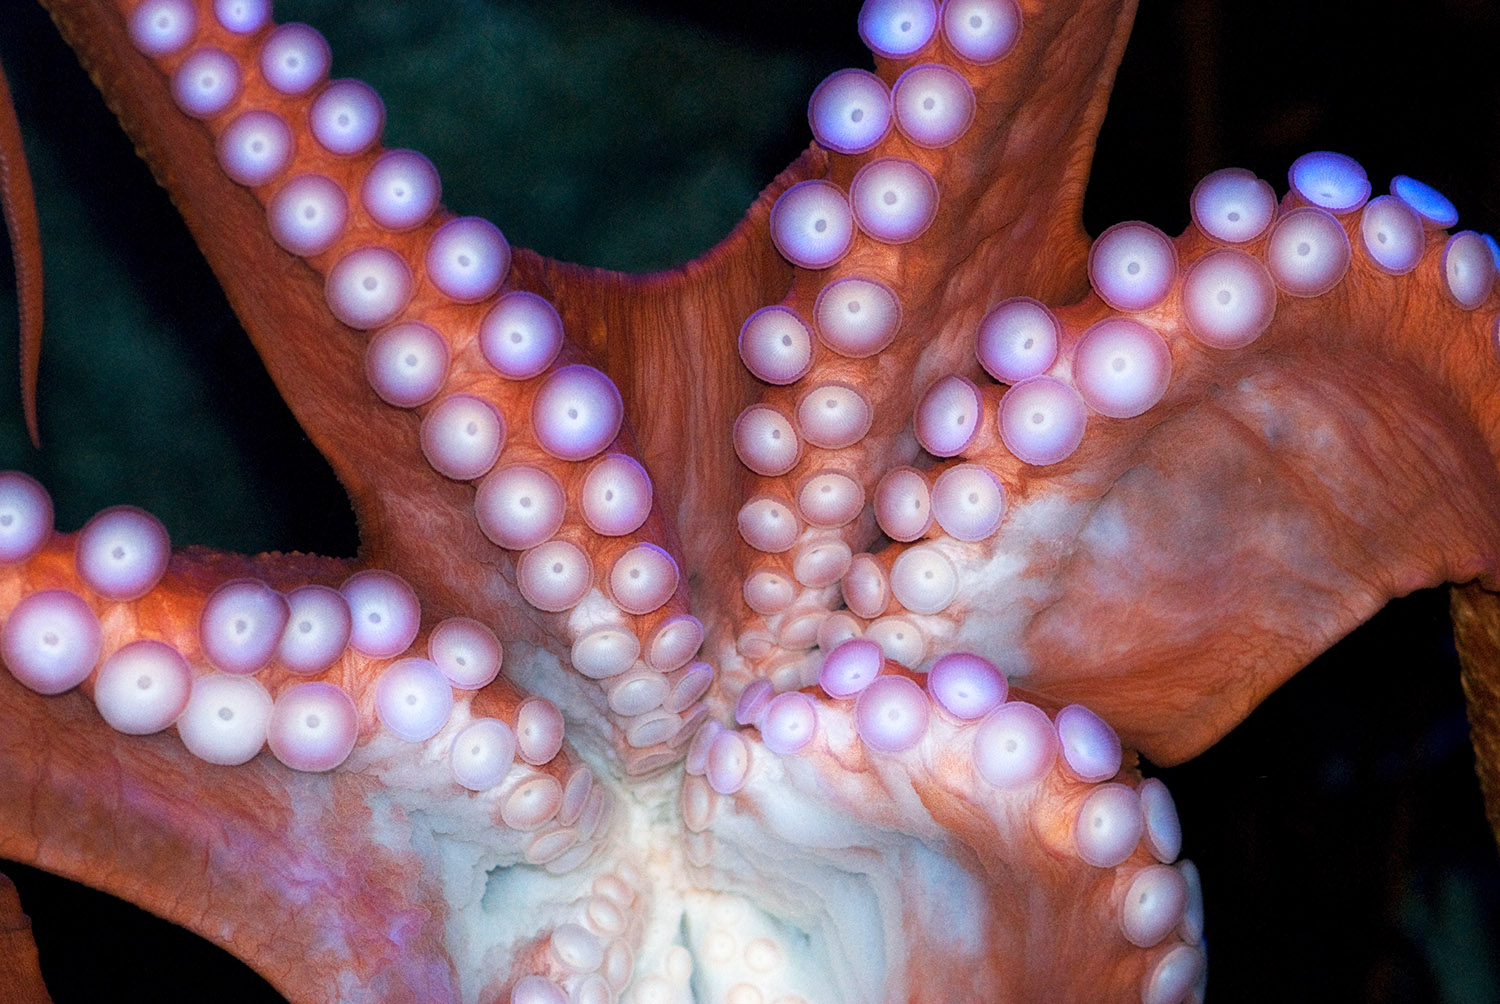 octopus-photo-image-019.jpg